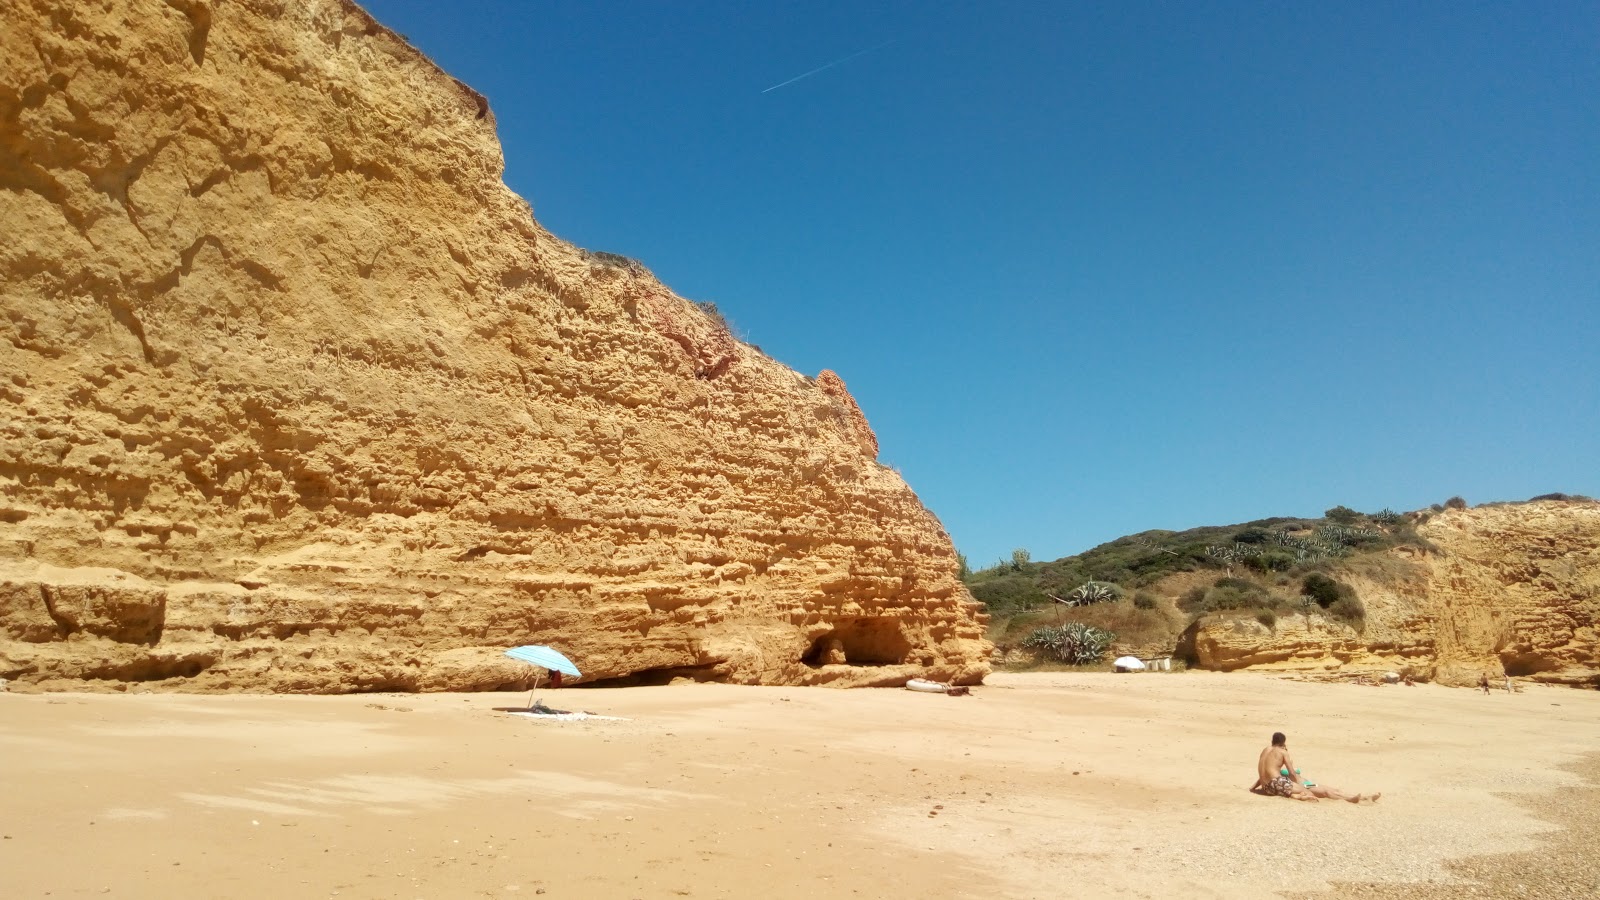 Cala del Puntalejo'in fotoğrafı parlak kum yüzey ile